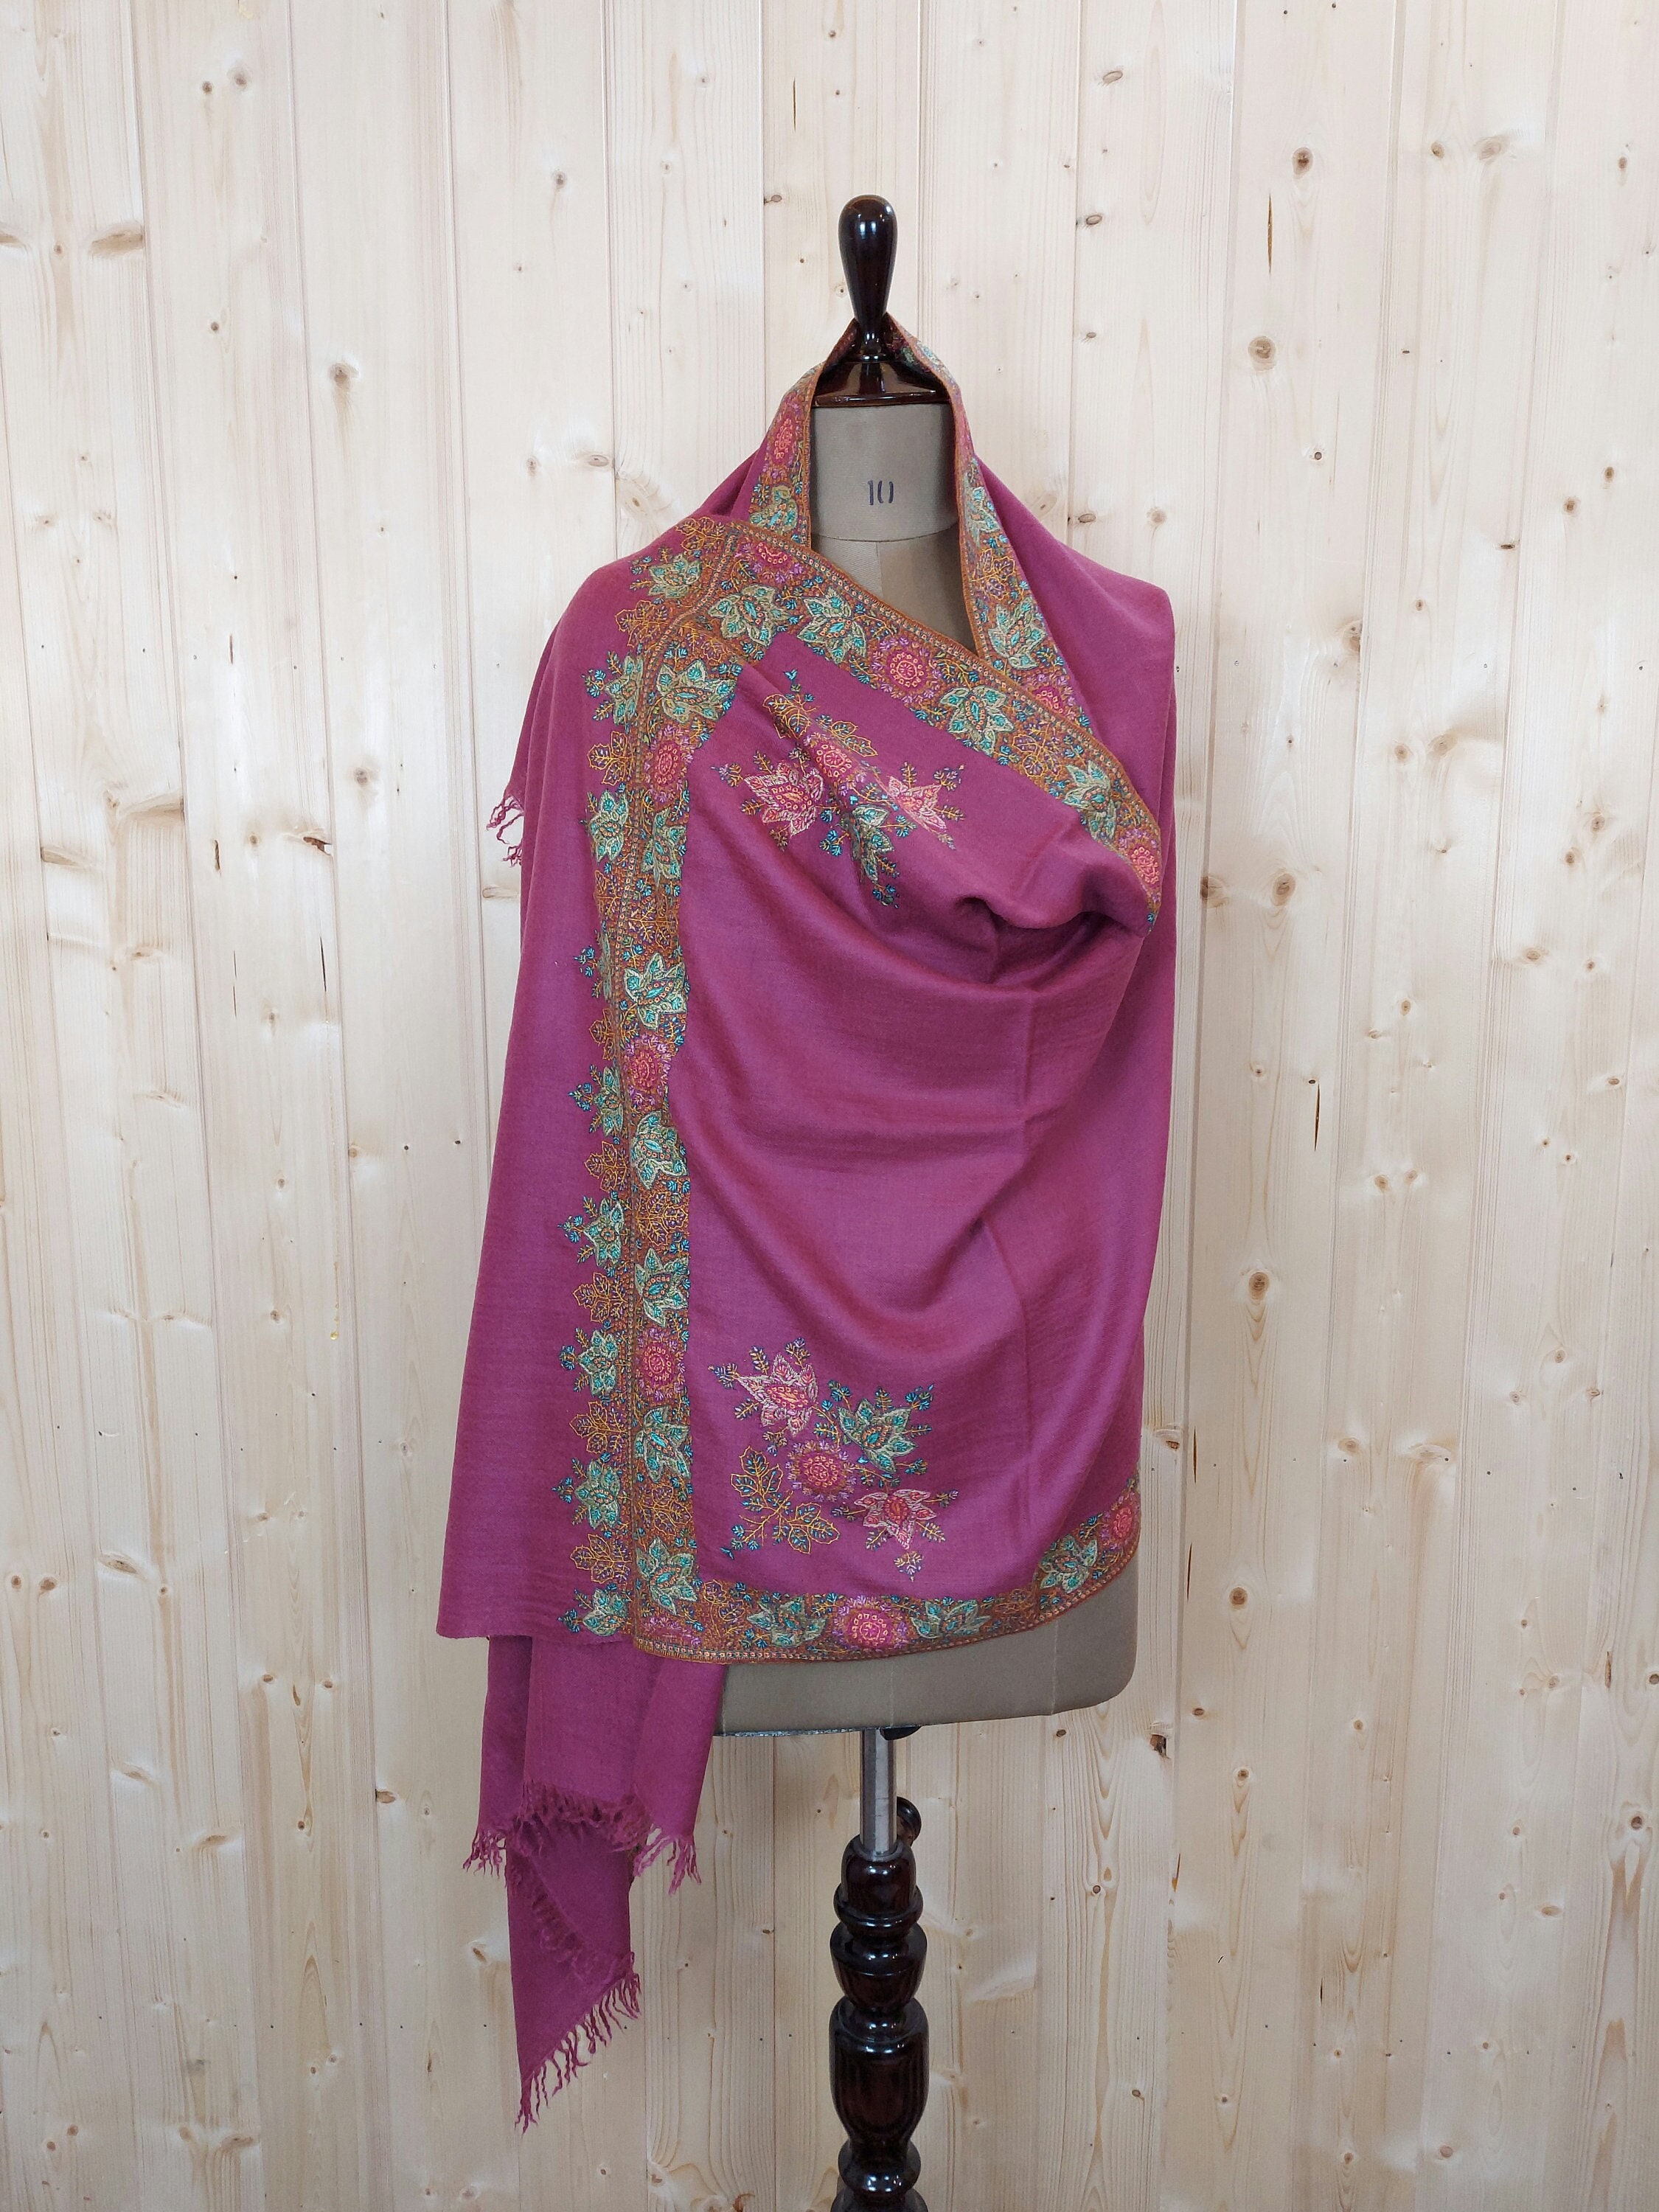 Luxury Brand Imitation Cashmere Scarf for Women Winter Shawl Thick Blanket  Print Wraps Female Bufanda Echarpe Pashmina Bandana